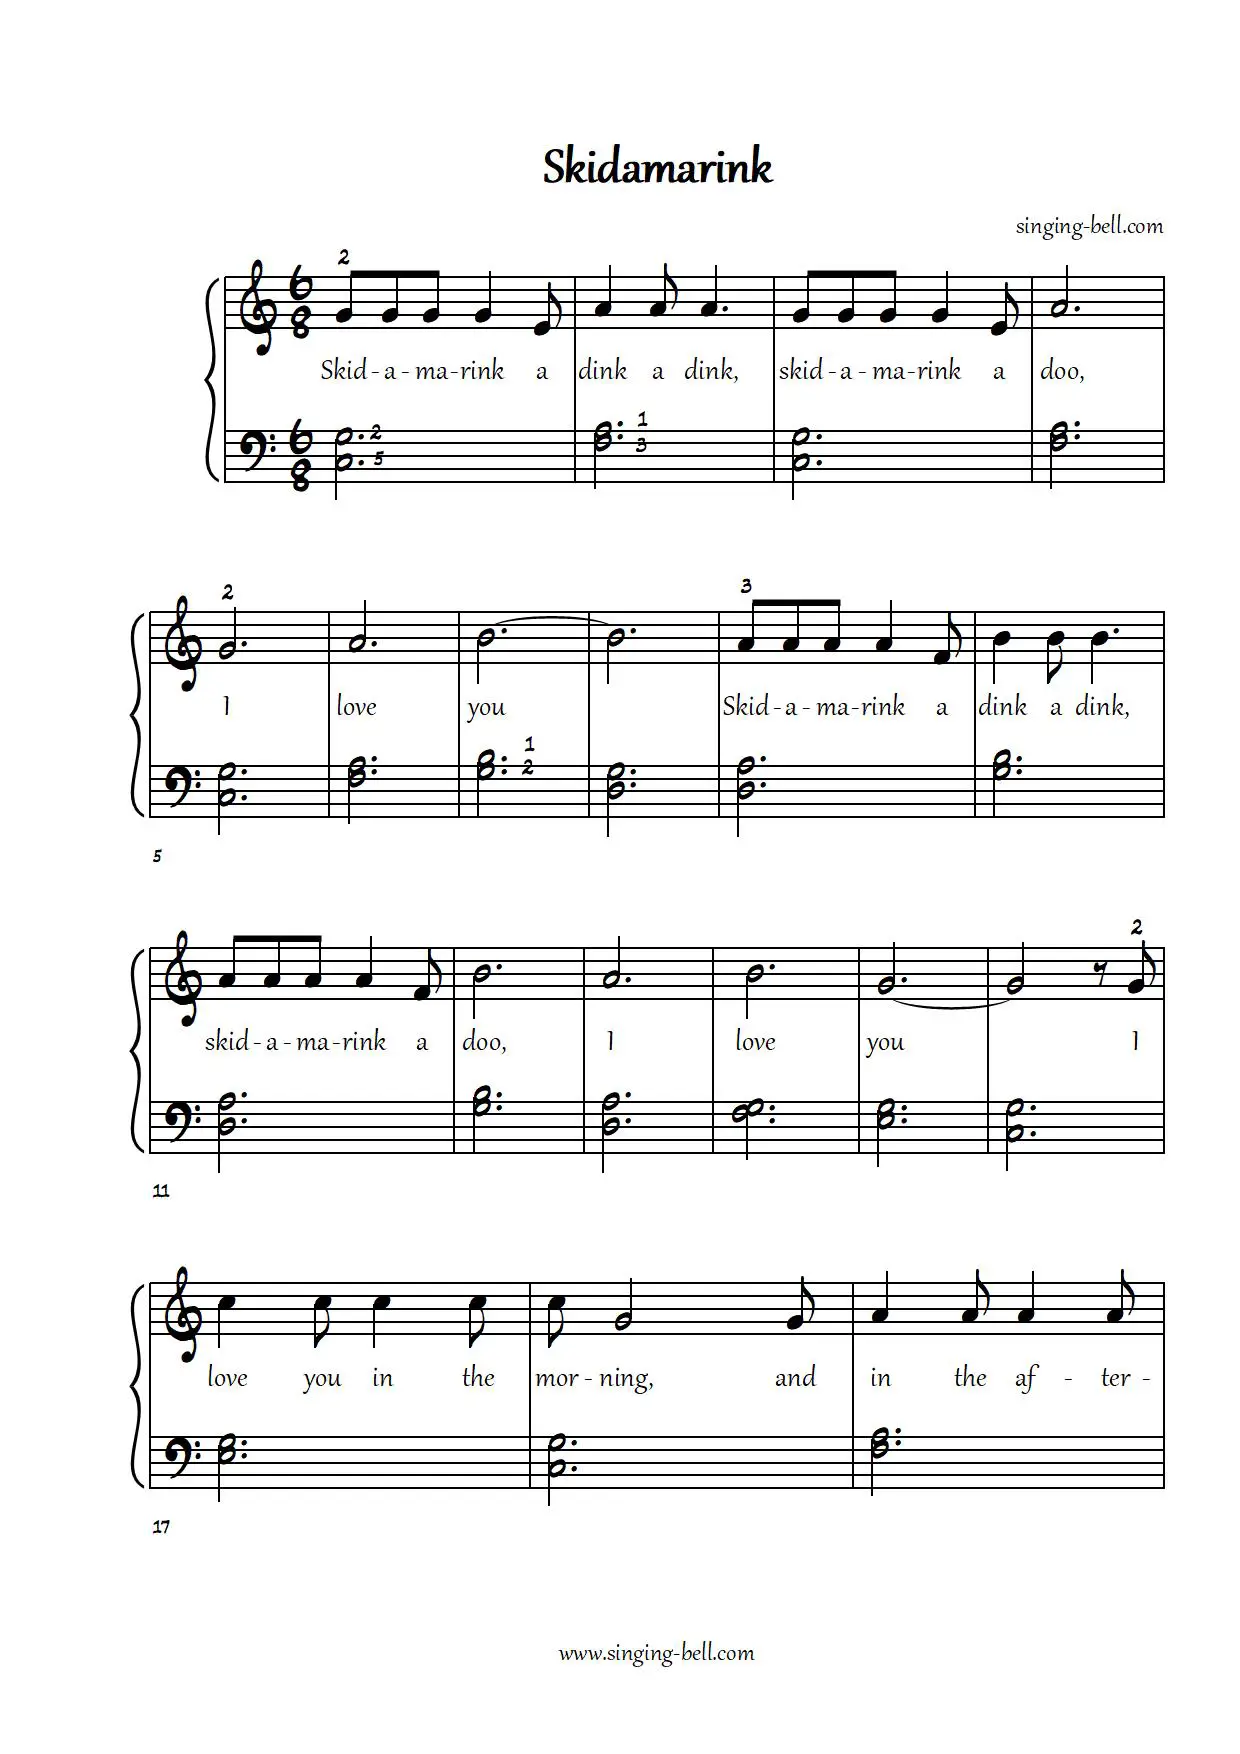 Skidamarink easy piano sheet music p.1 notes chords beginners pdf